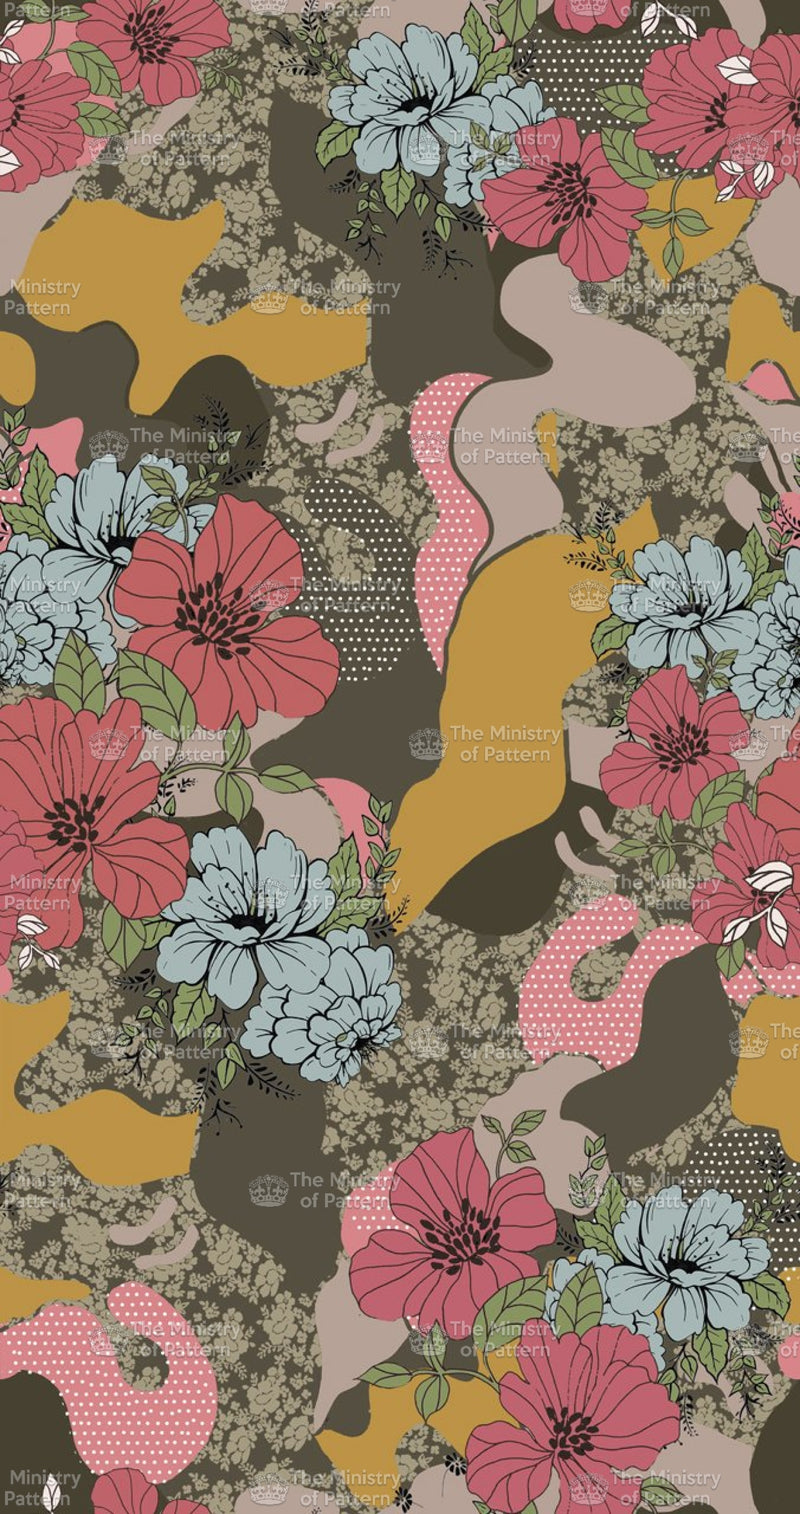 Patch Graphic Floral - The Ministry Of Pattern - Patternsforlicensing-textilestudio-printdesignstudio-trendinspiration-digitalprintdesign-exclusivepattern-printtrends-patternoftheweek